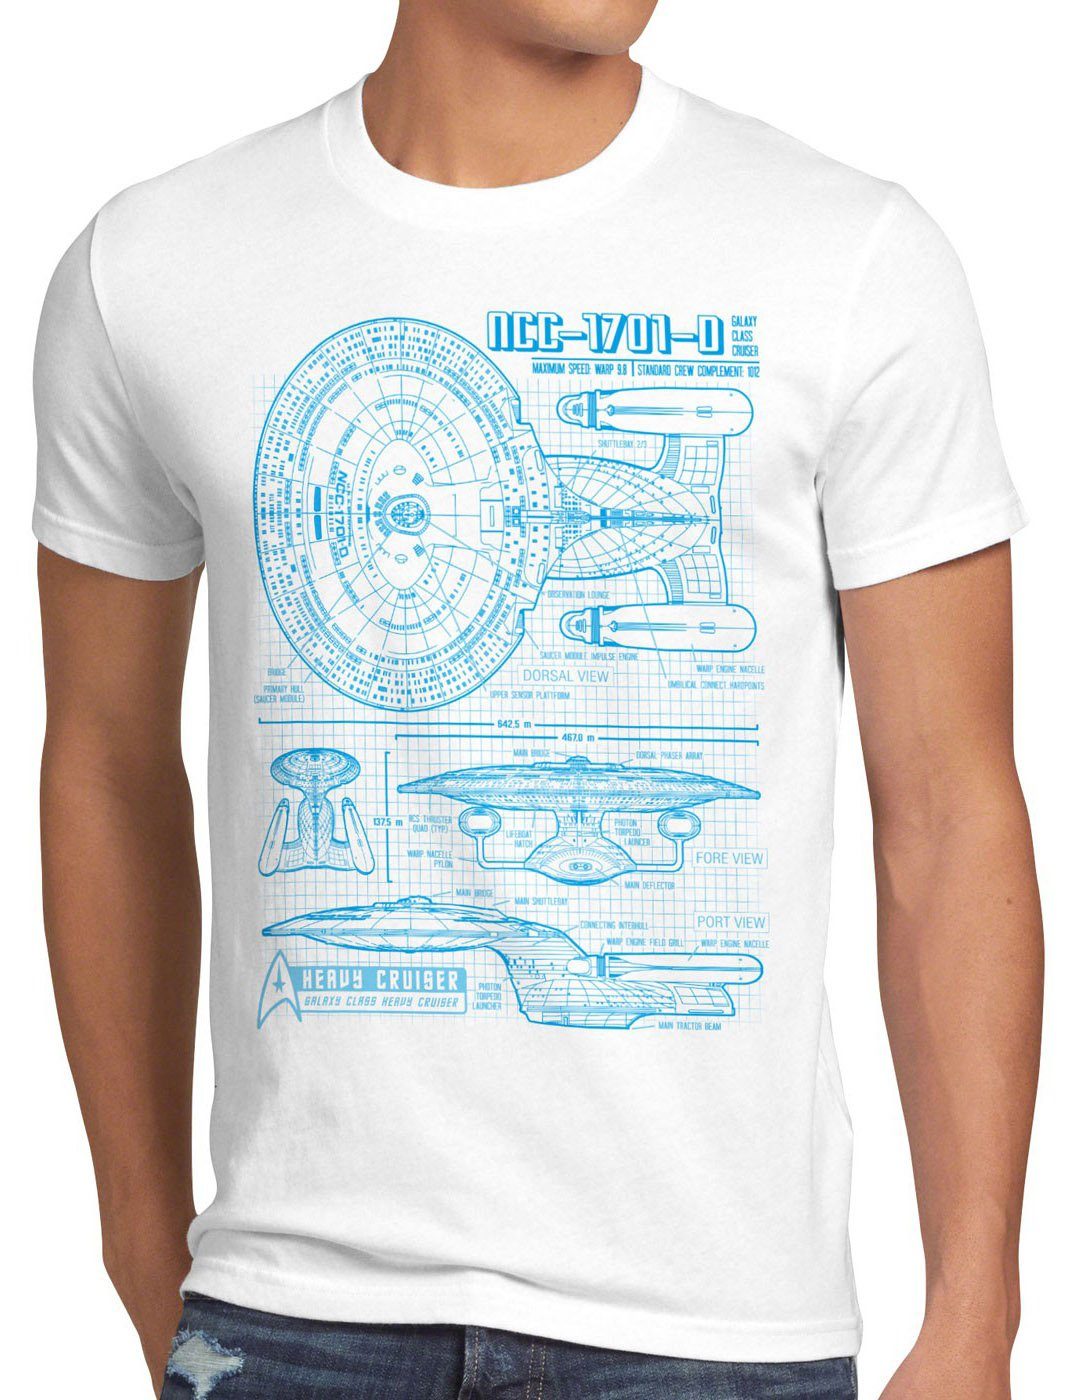 style3 Print-Shirt Herren T-Shirt NC-1701D Enterprise Blaupause trek trekkie star jean luc picard weiß